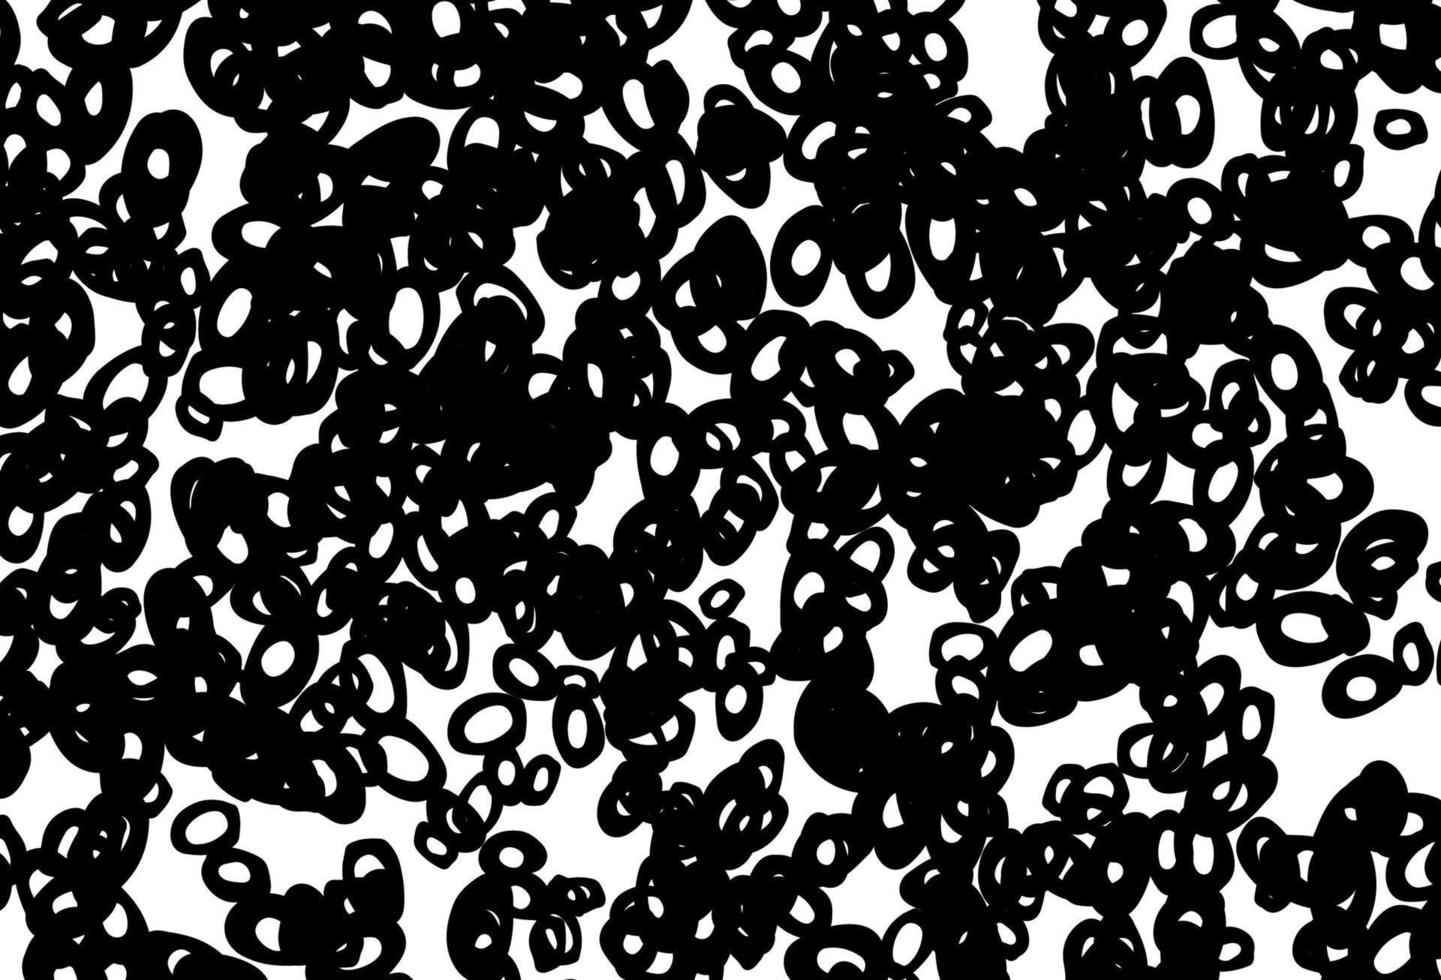 svartvitt vektorlayout med cirkelformer. vektor